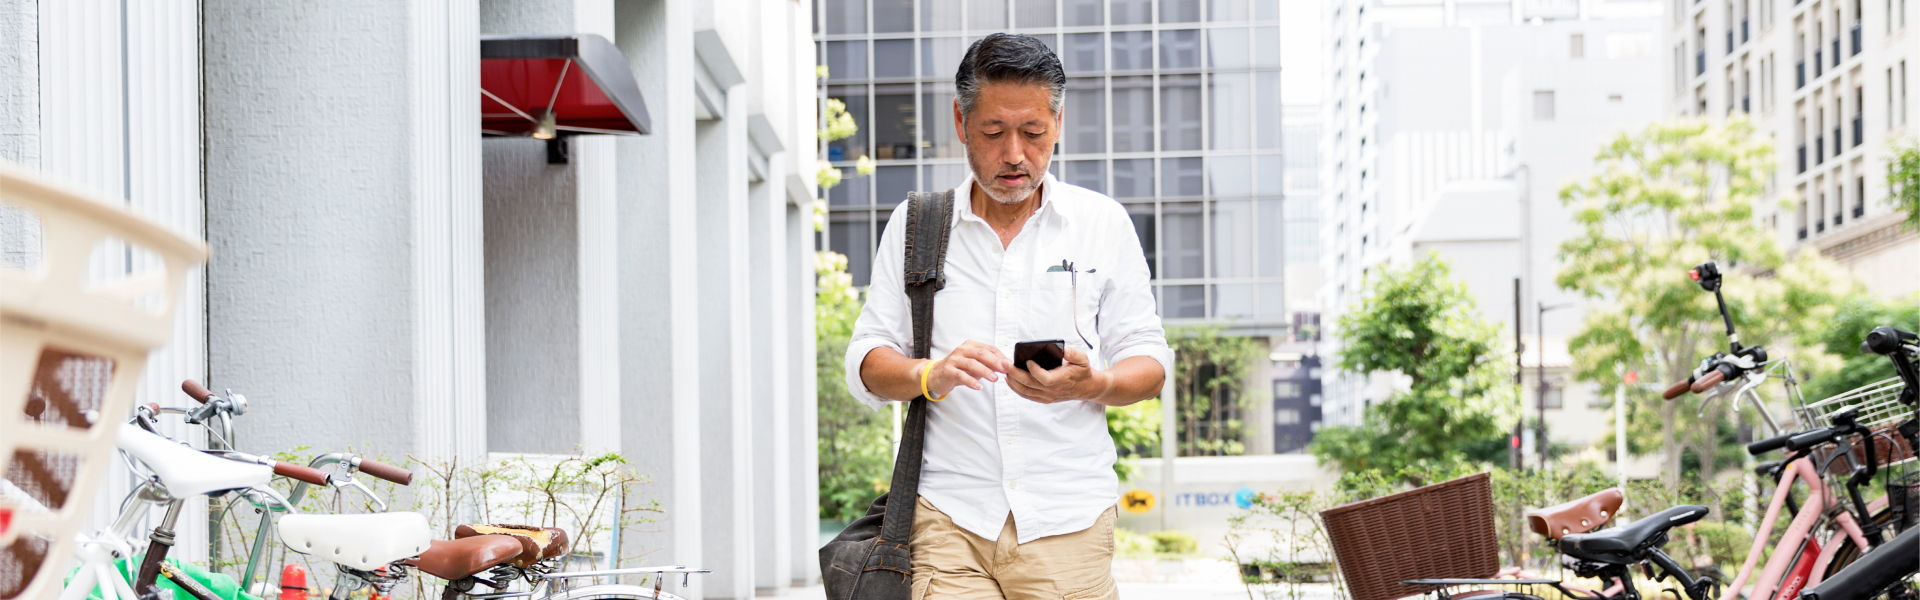 Man in white shirt checks smartphone while walking down a city street.	